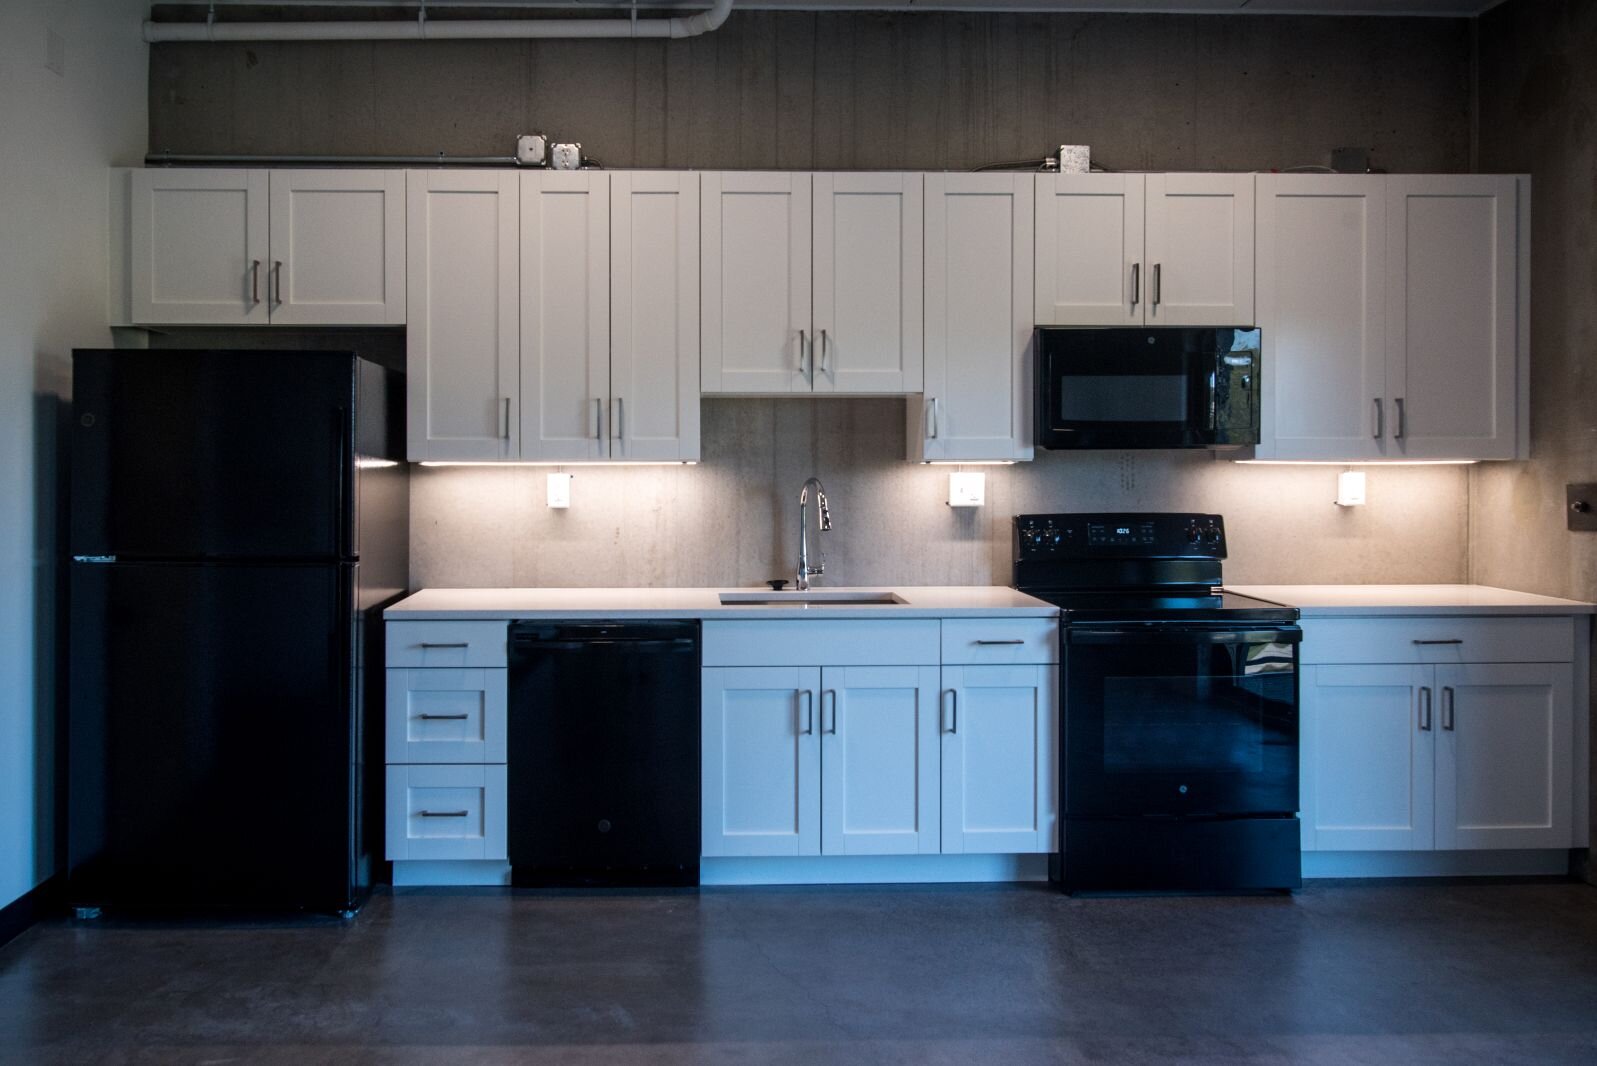 Each apartment unit has a full array of kitchen appliances.